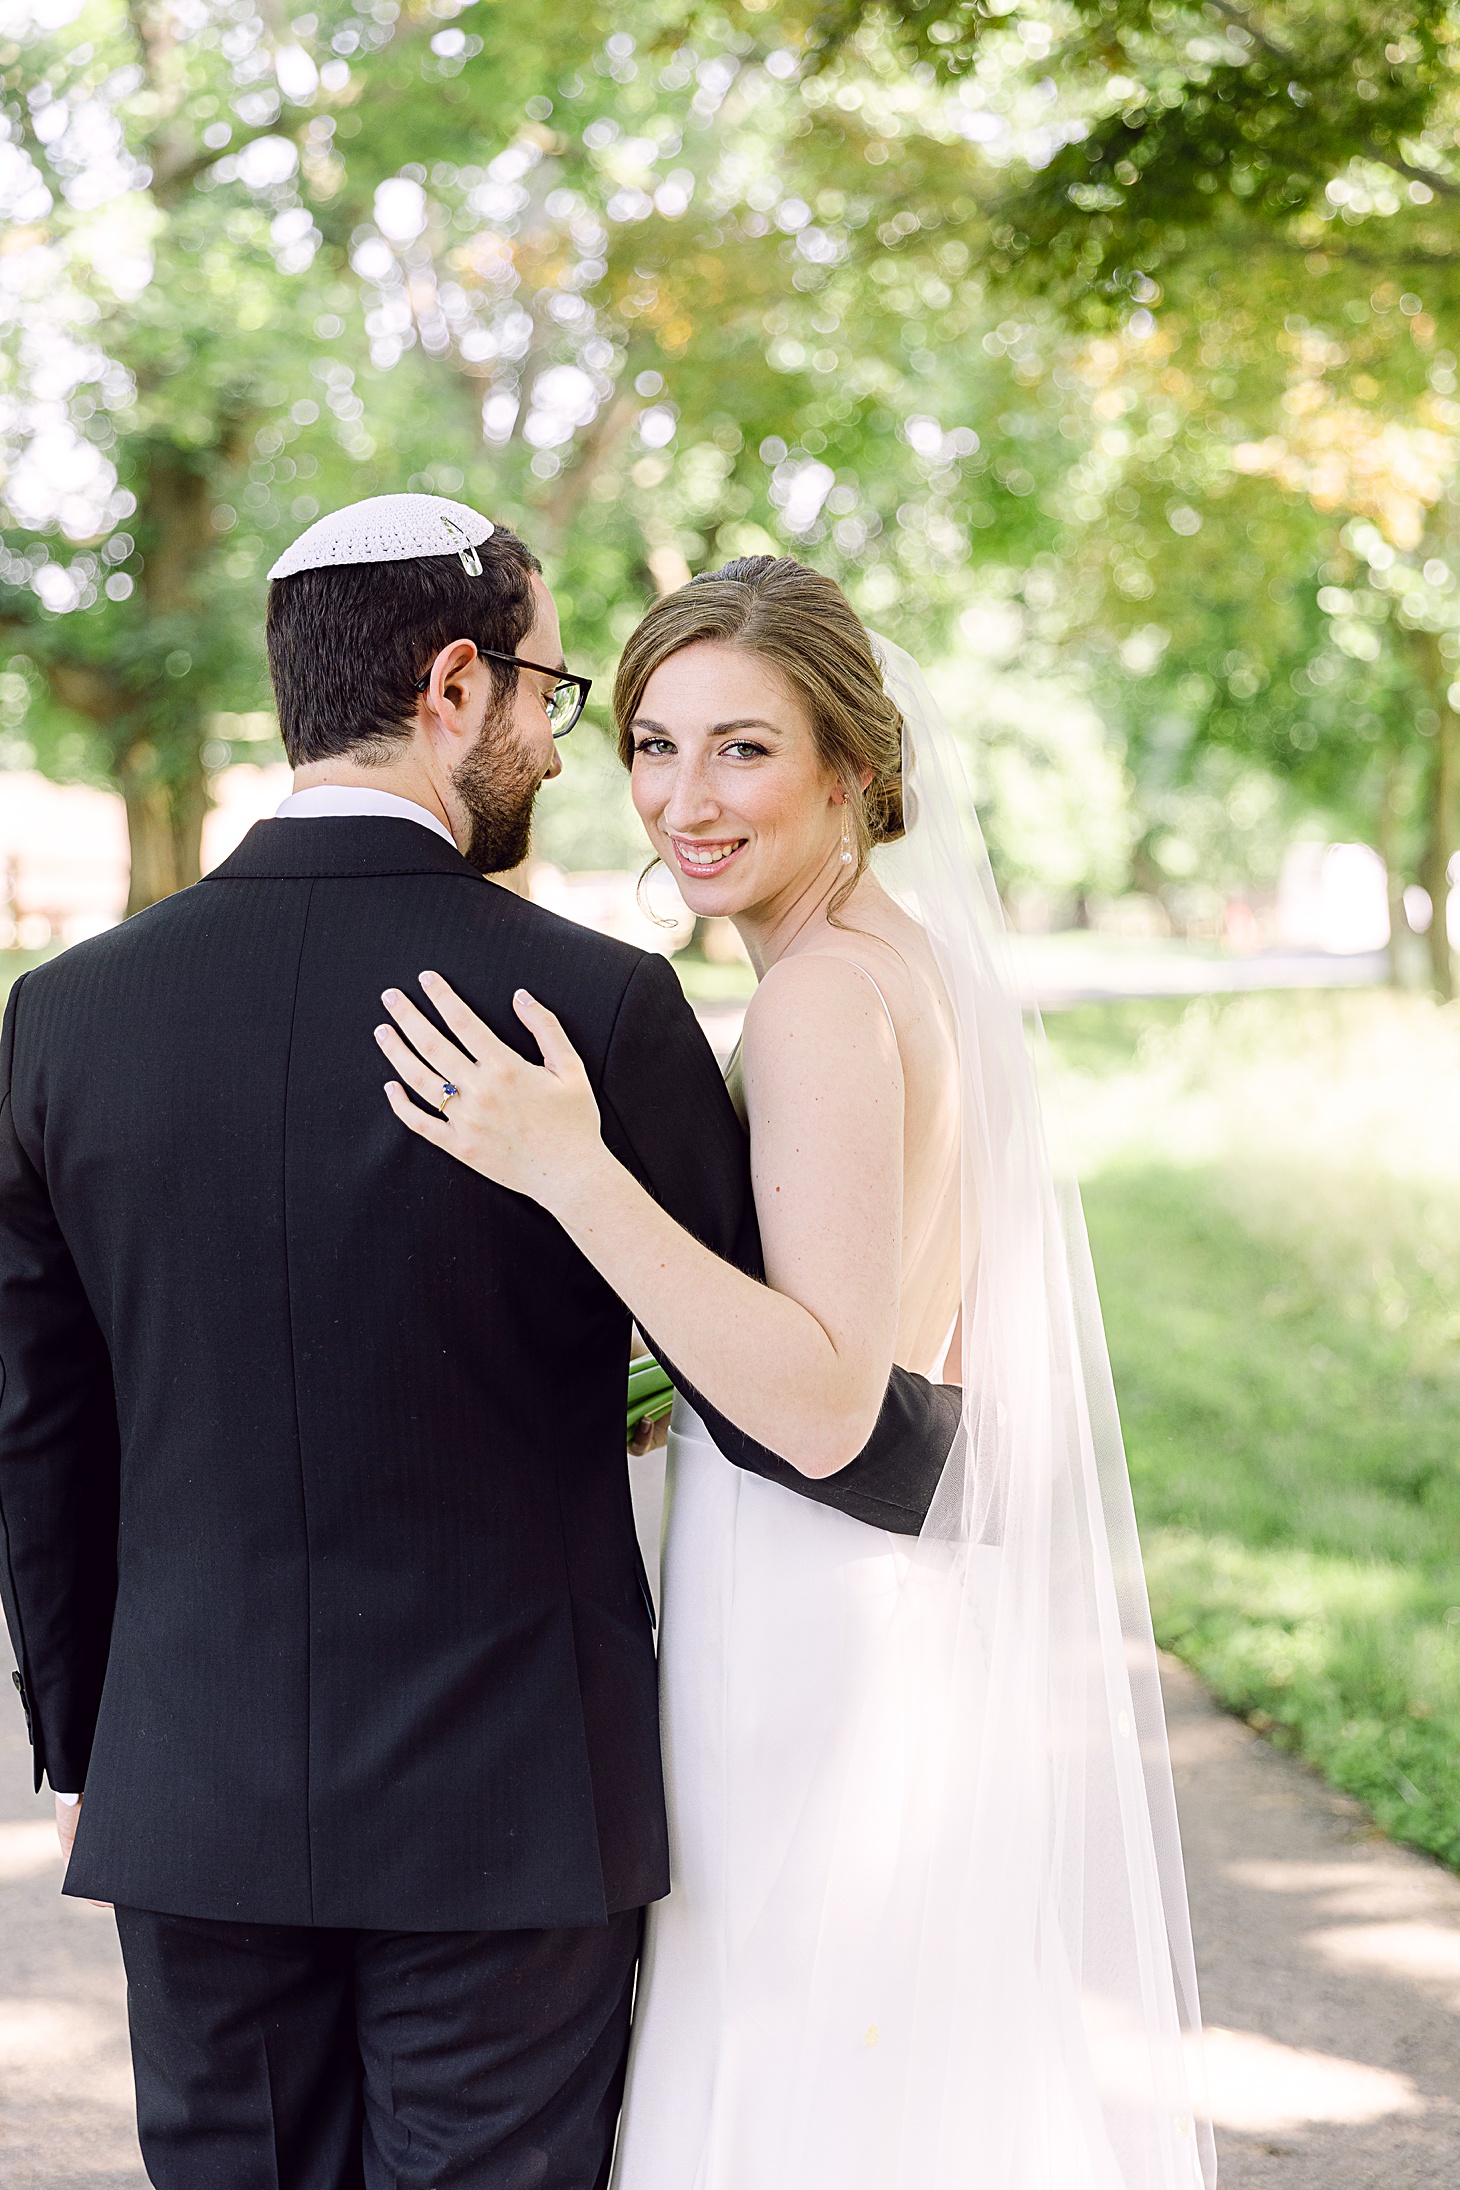 Summer wedding | Modern Music-Inspired Jewish Wedding at Private Estate by Sarah Bradshaw